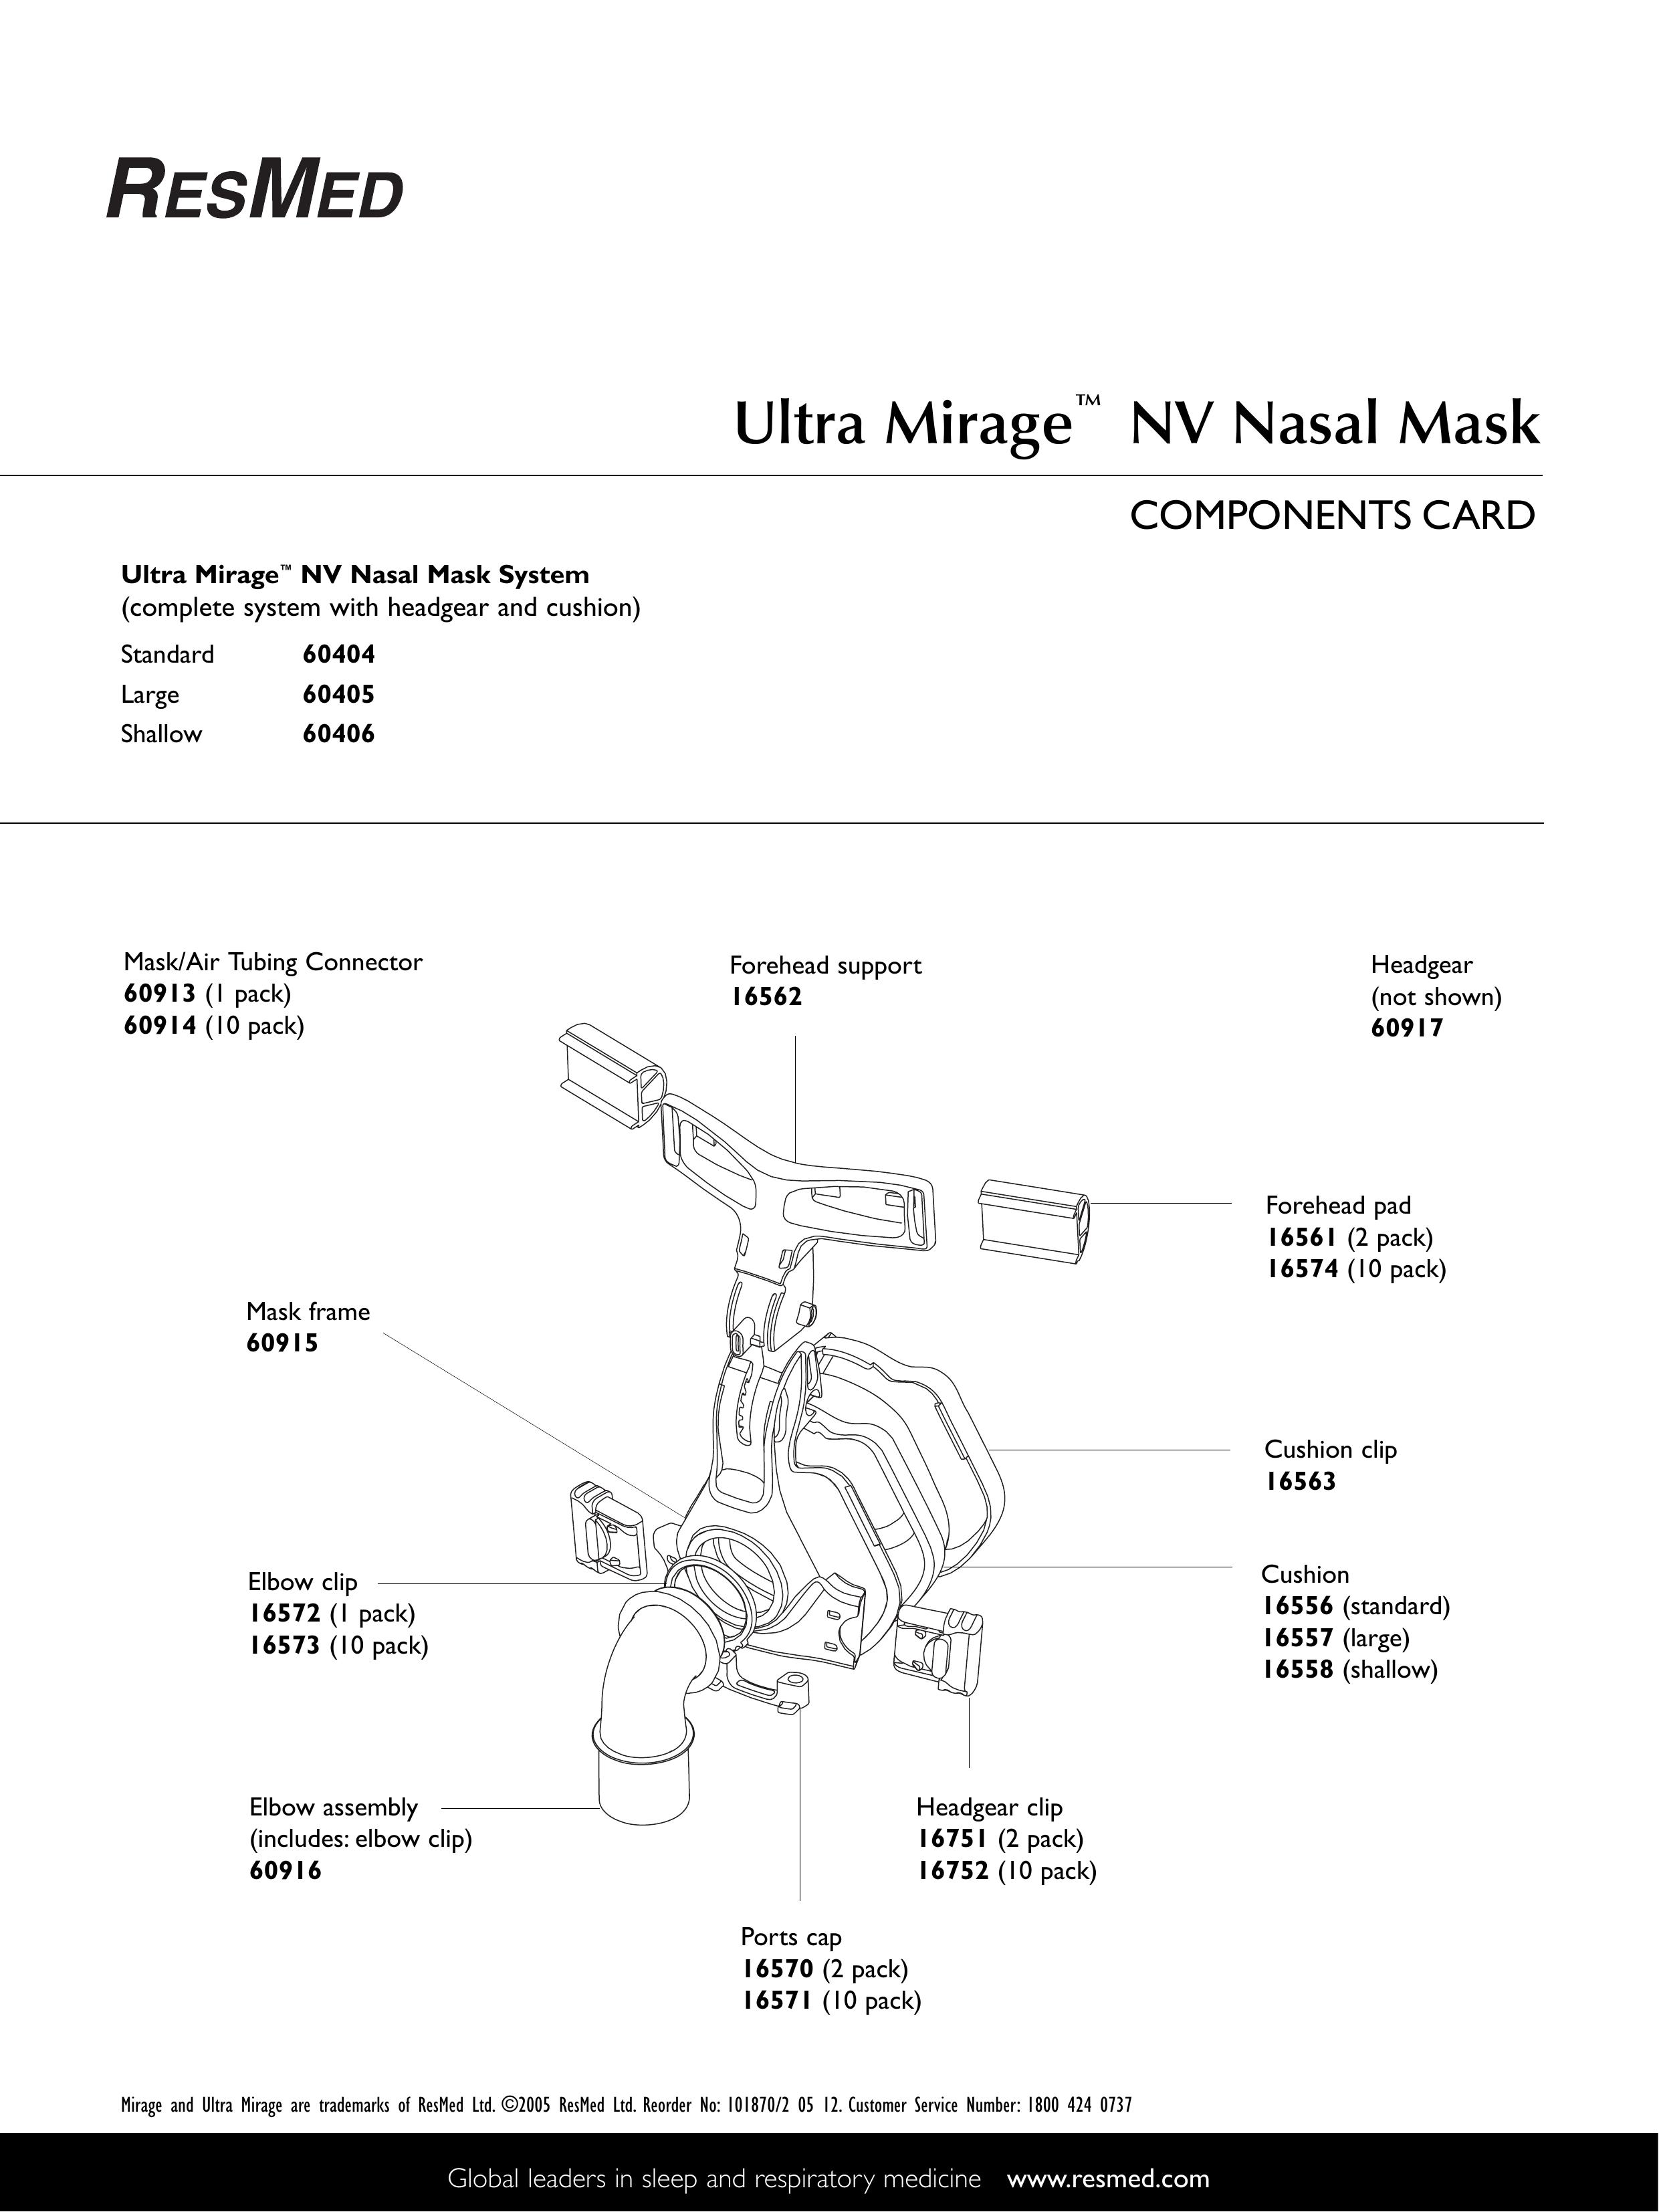 ResMed NV Nasal Mask Respiratory Product User Manual